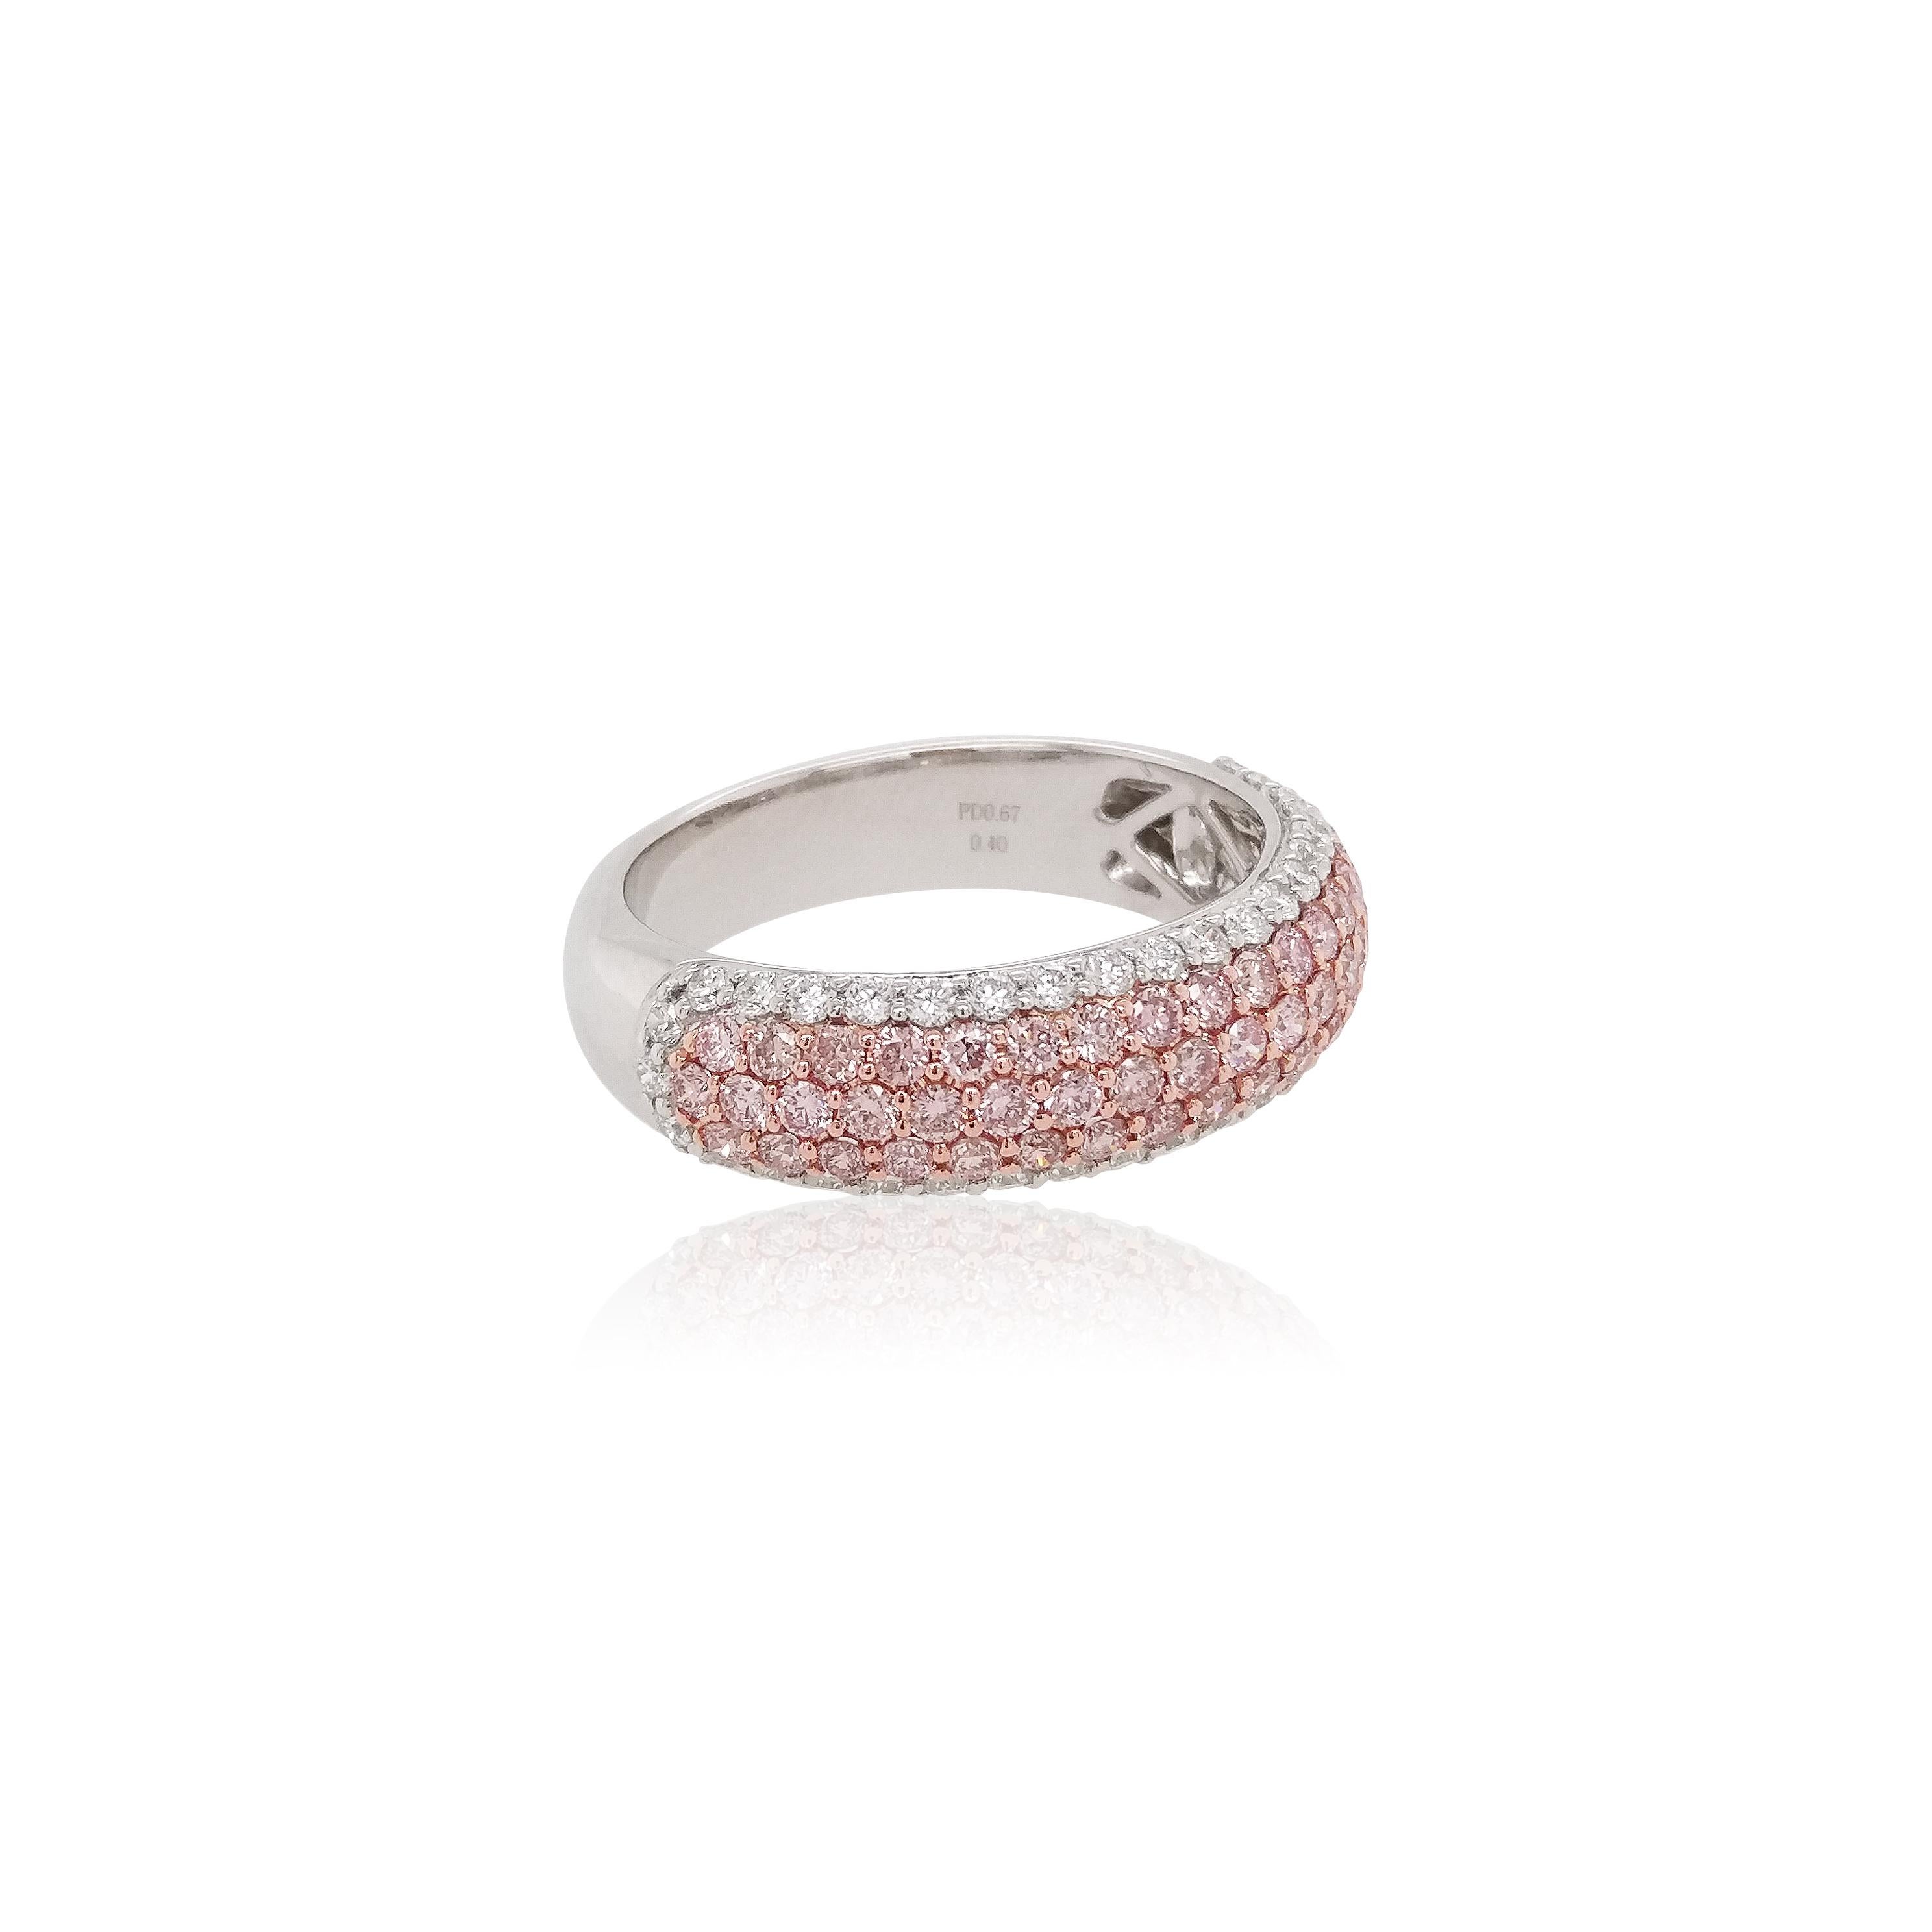 Contemporary Natural Argyle Pink Diamond Band Ring in Platinum and 18 Karat Pink Gold